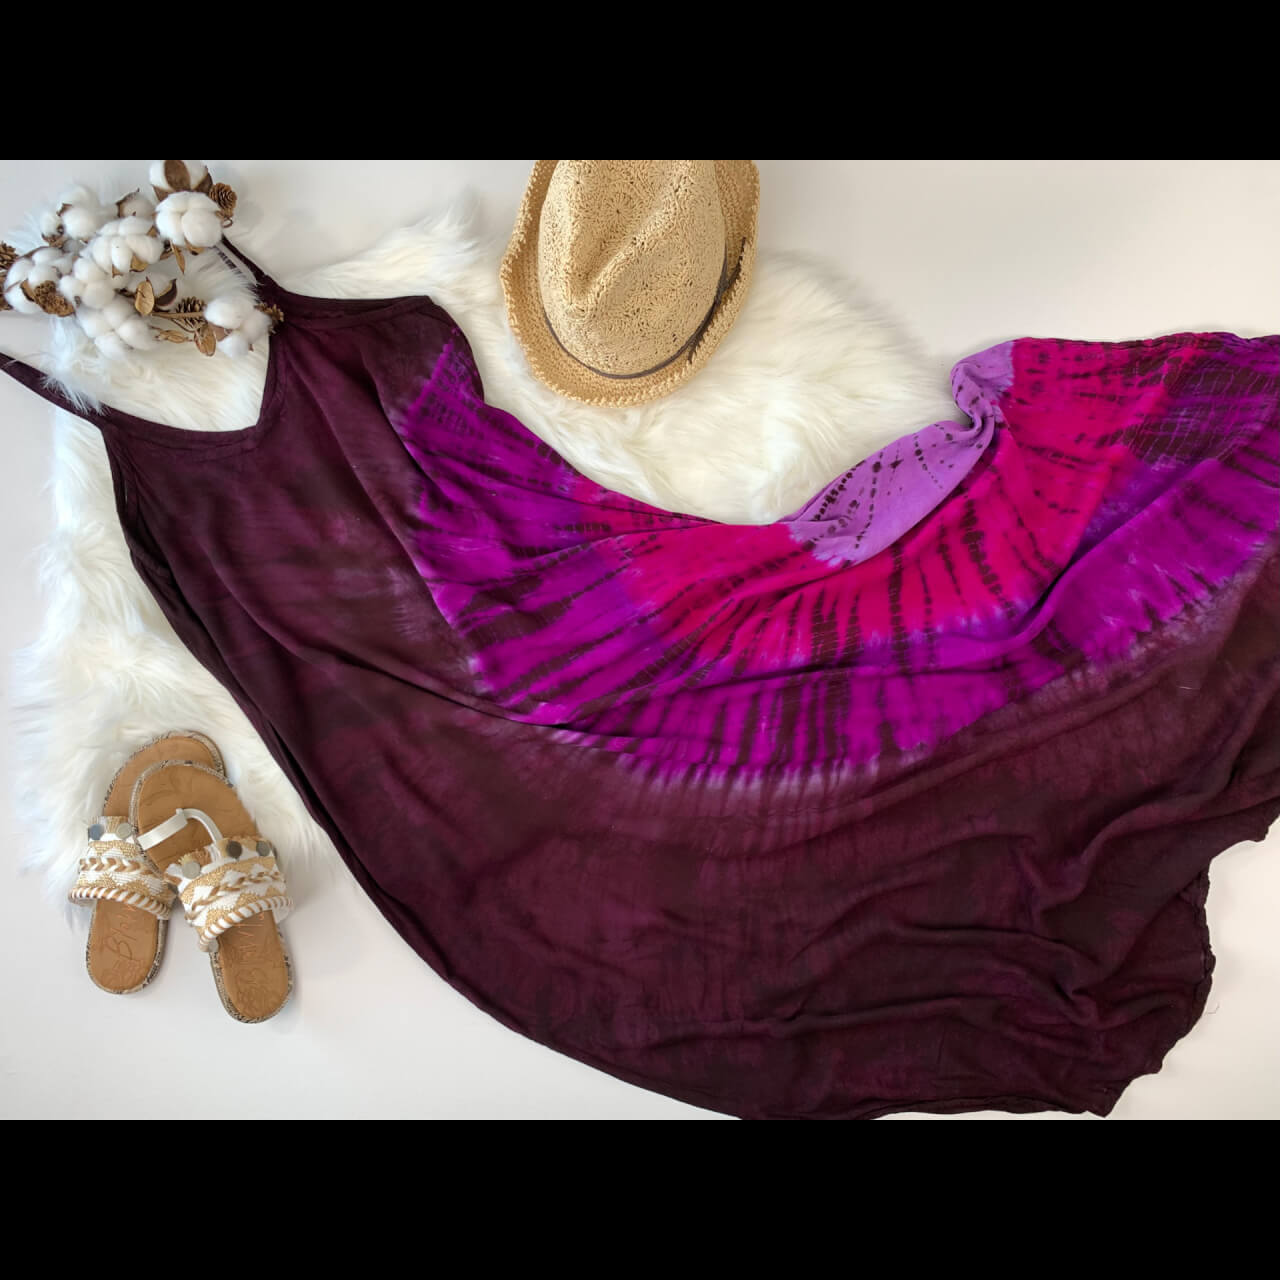 shibori dyed dress